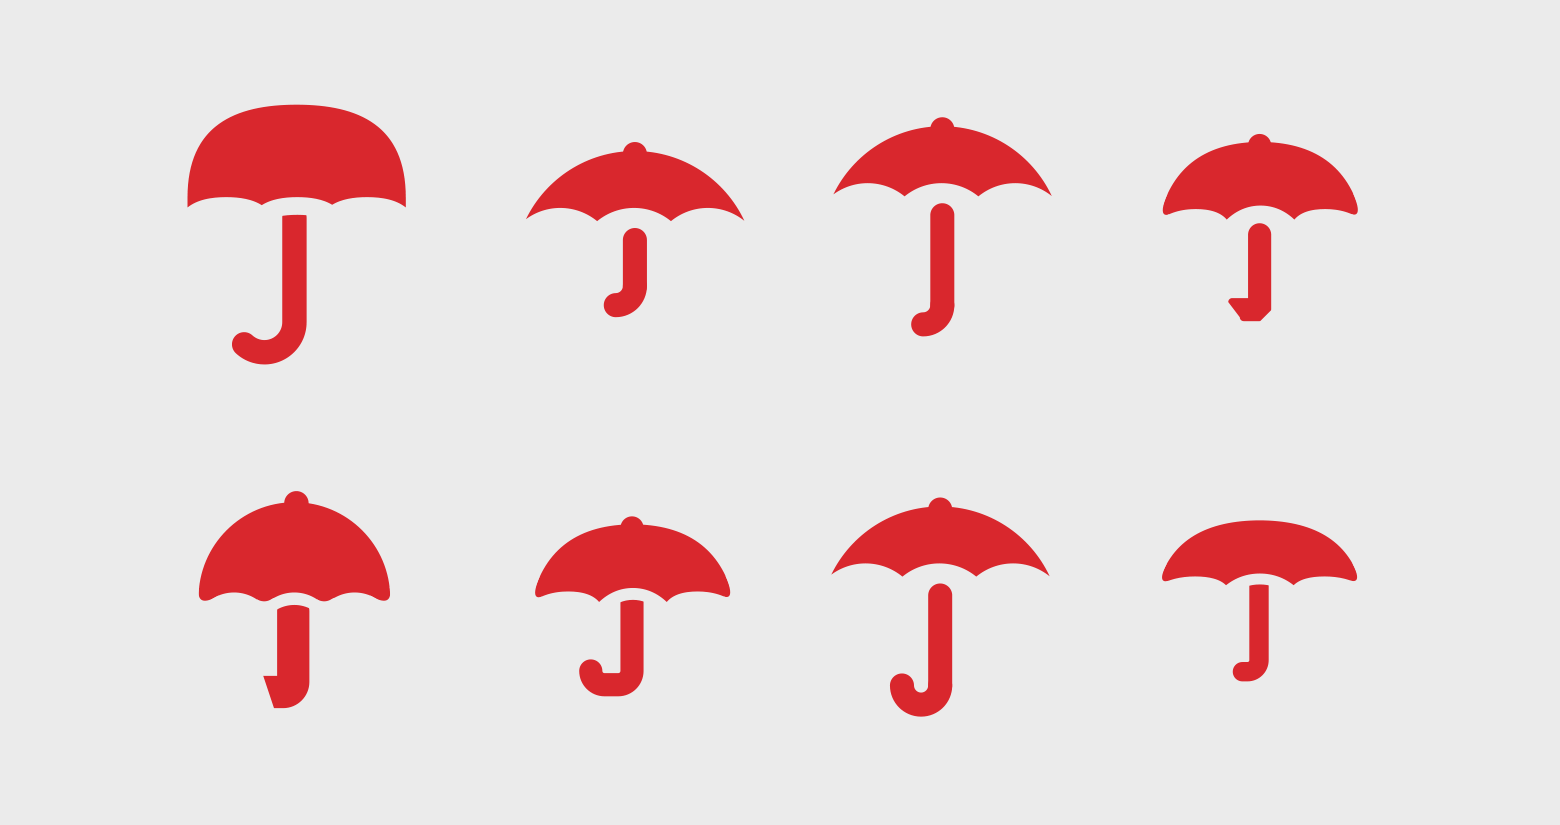 Red Umbrella Travelers Logo - Travelers Insurance